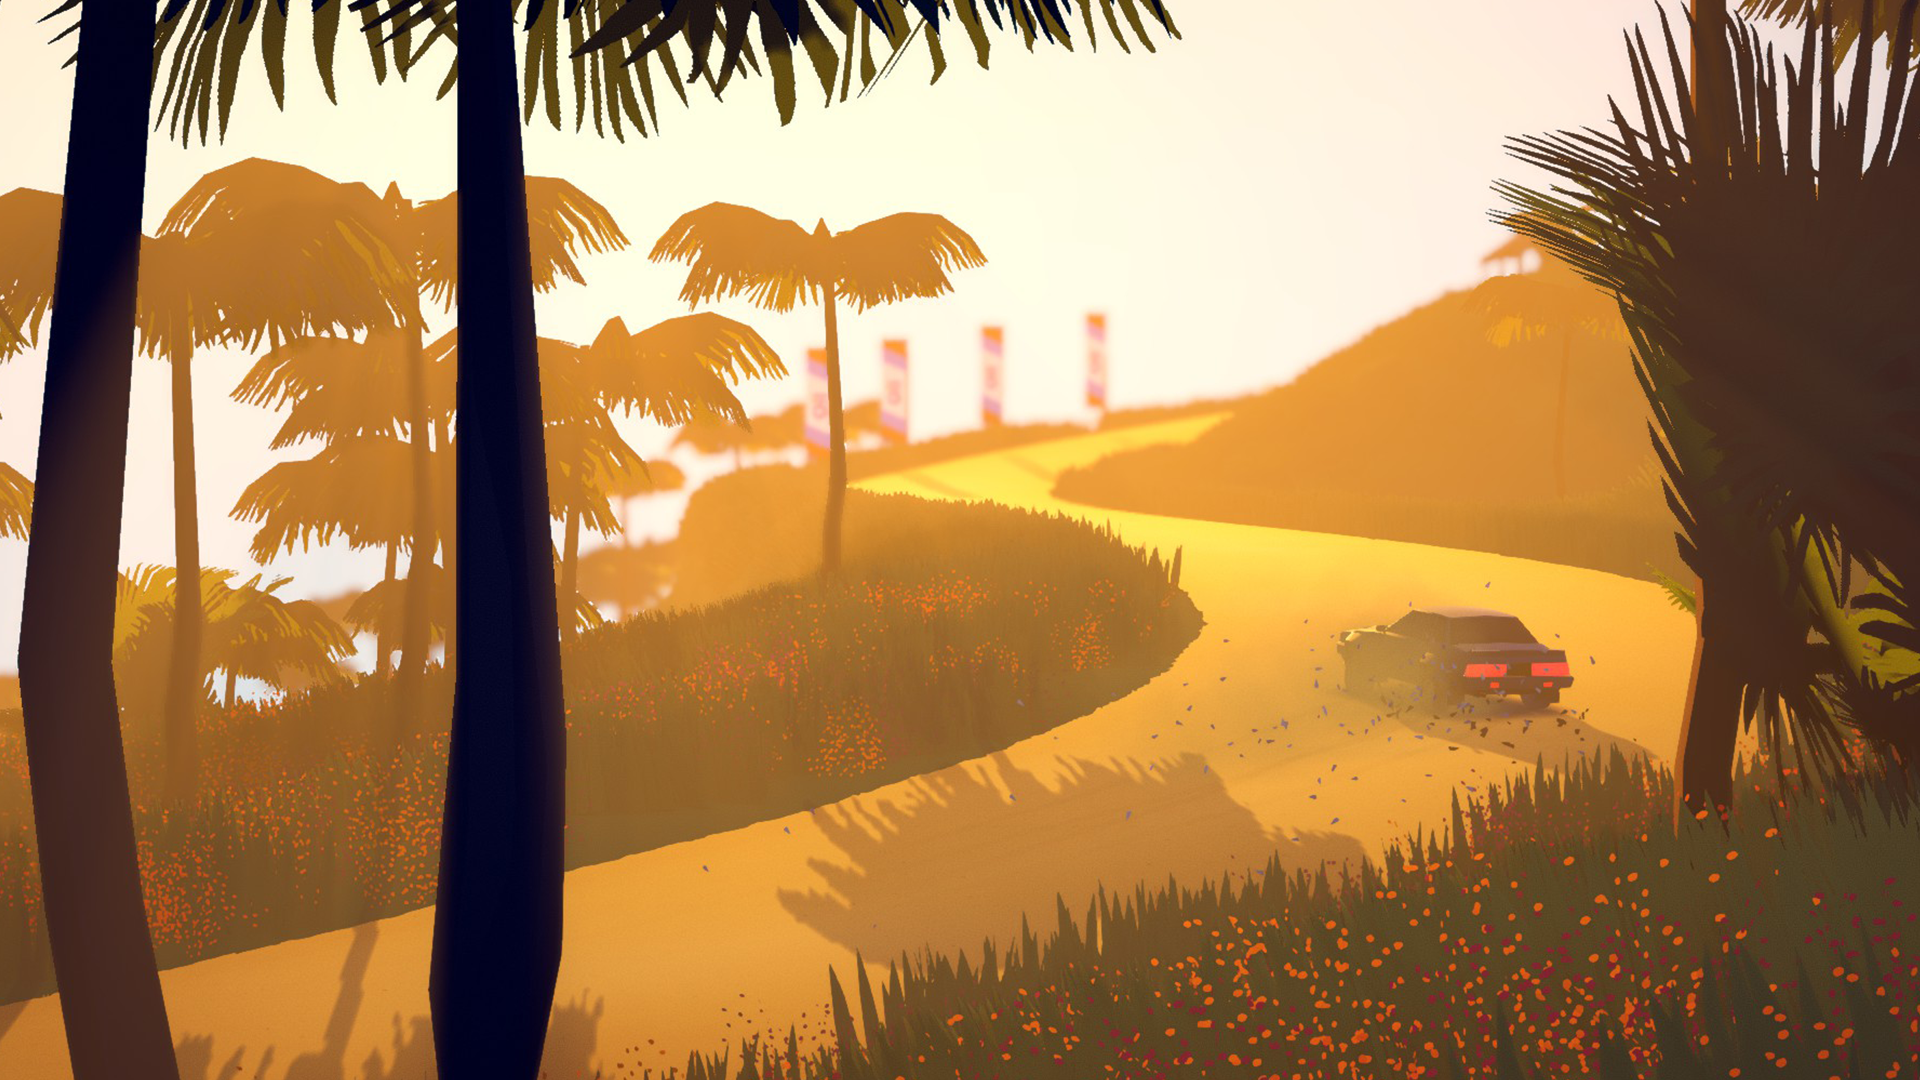 Art of Rally screenshot game